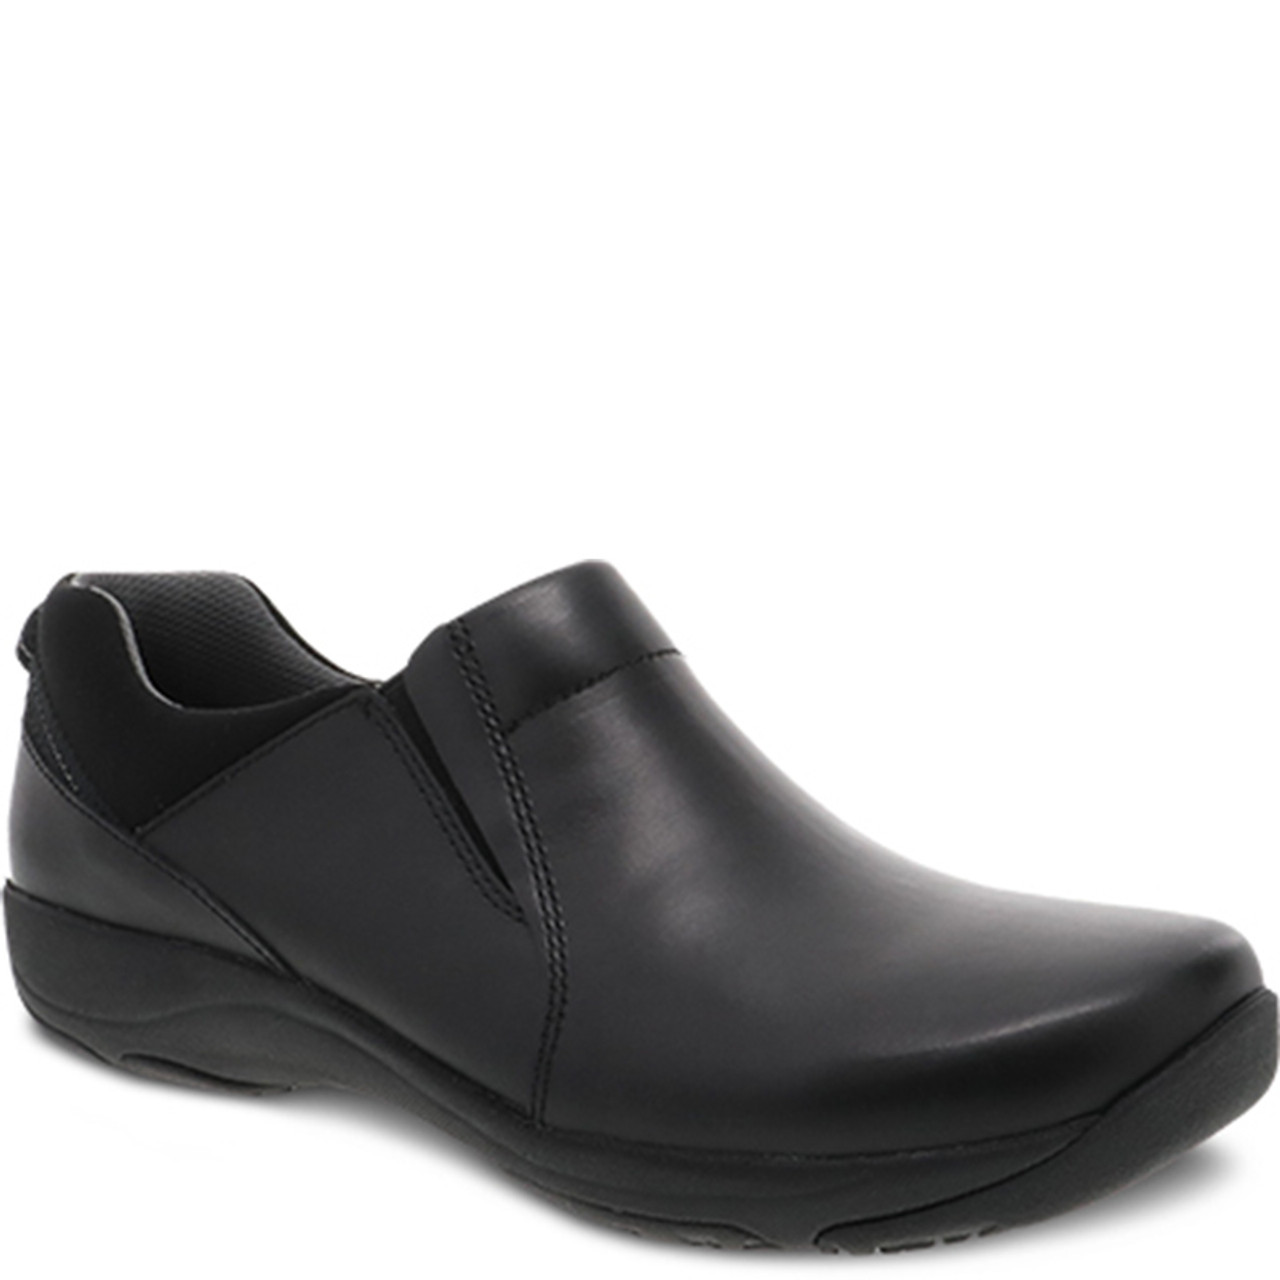 dansko slip resistant work shoe